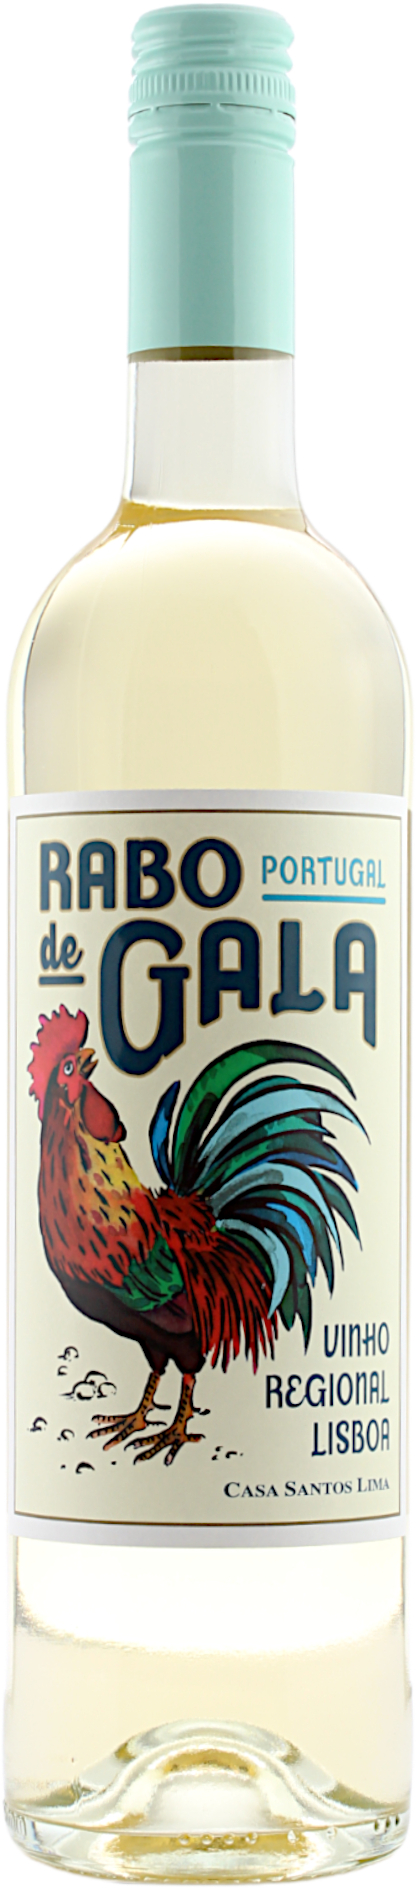 Rabo de Gala Branco Vinho Regional Lisboa 12.5% 0,75l